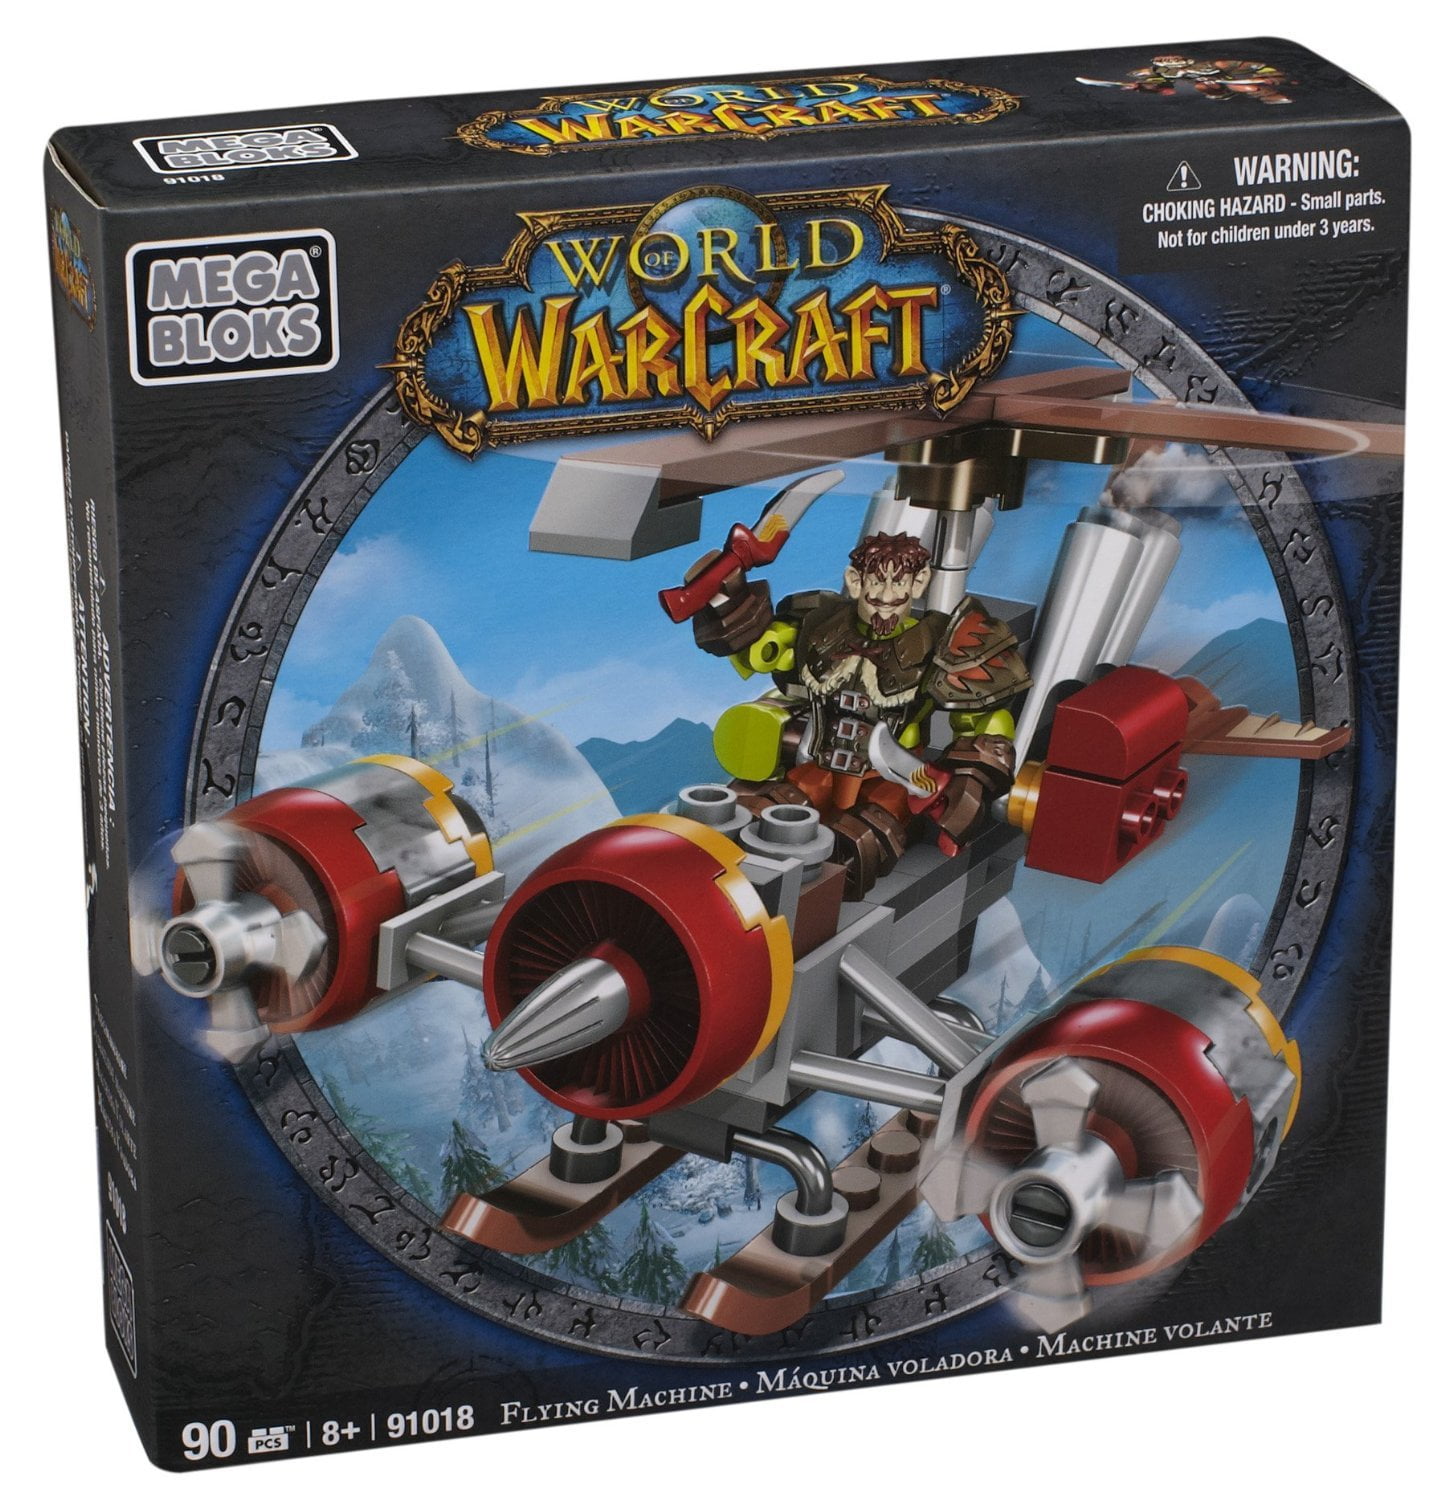 NEU Buch World of Warcraft Mega Bloks Barrens Chase 